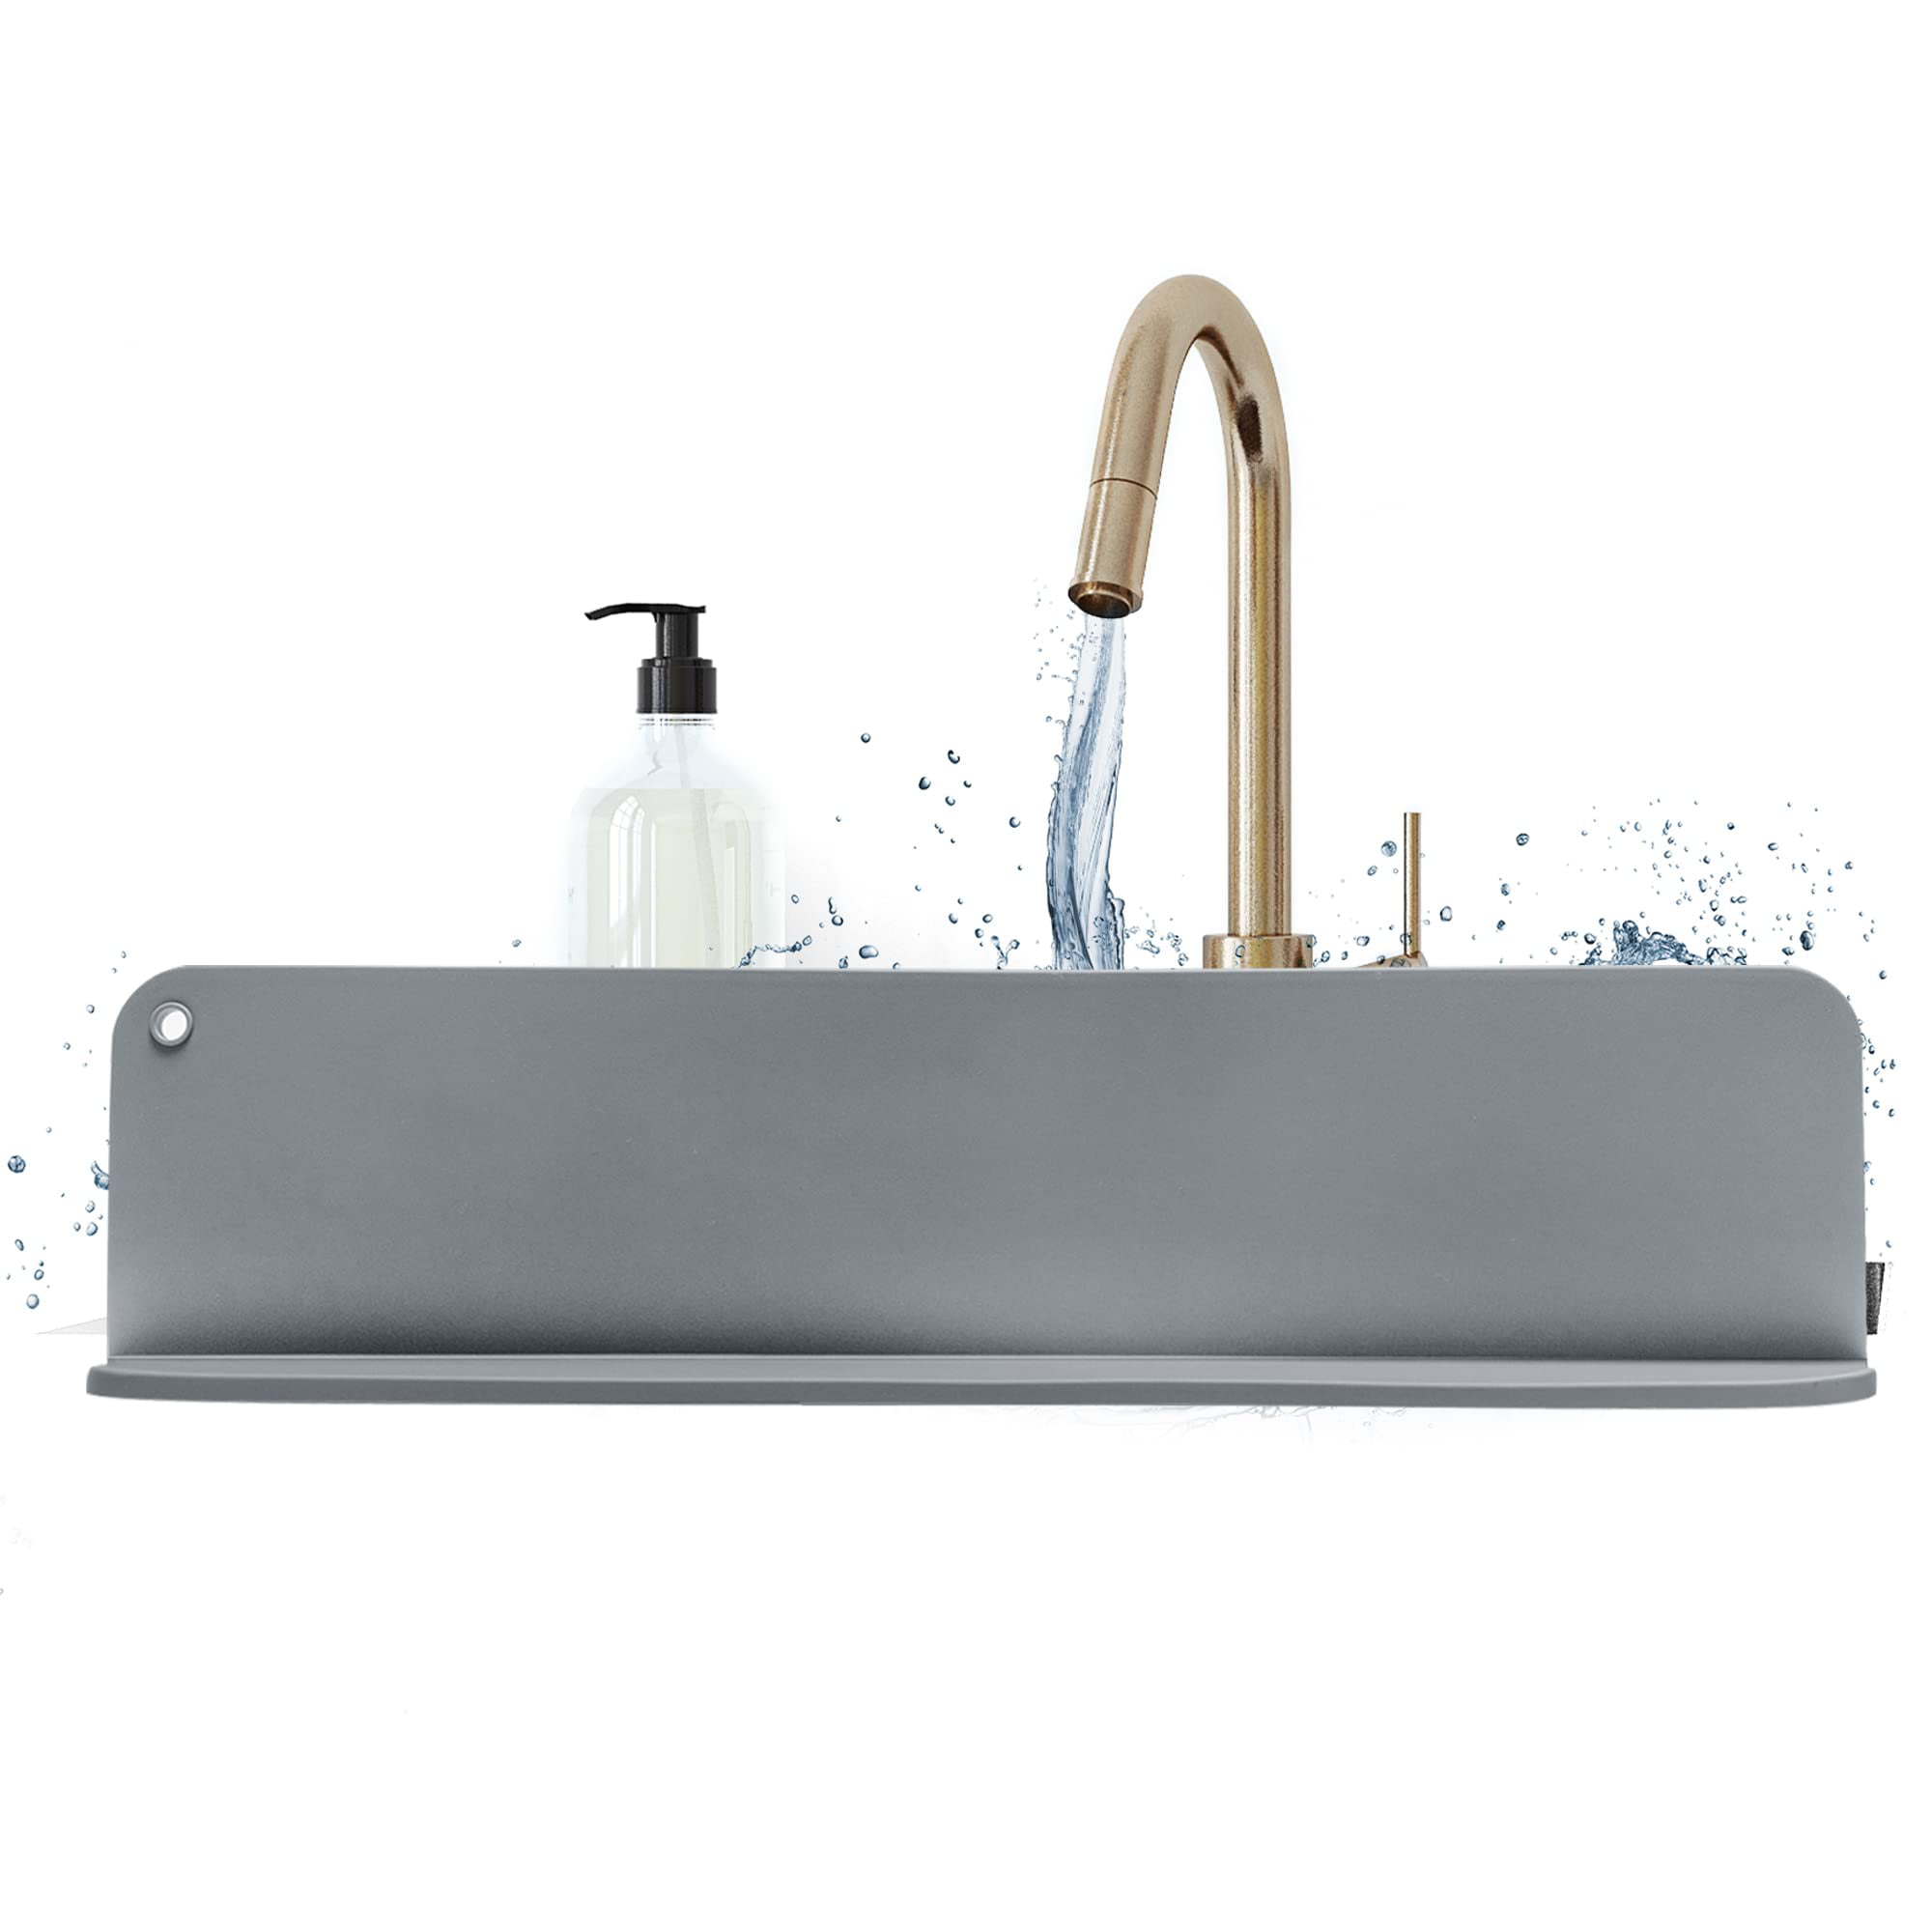 Kitchen Sink Splash Guard - Silicone Splash Guard for Water Sink, Bathtub,  Faucet, Sink Backsplash Guard Behind Faucet (17.3 x 4.1 Inch) – Grey